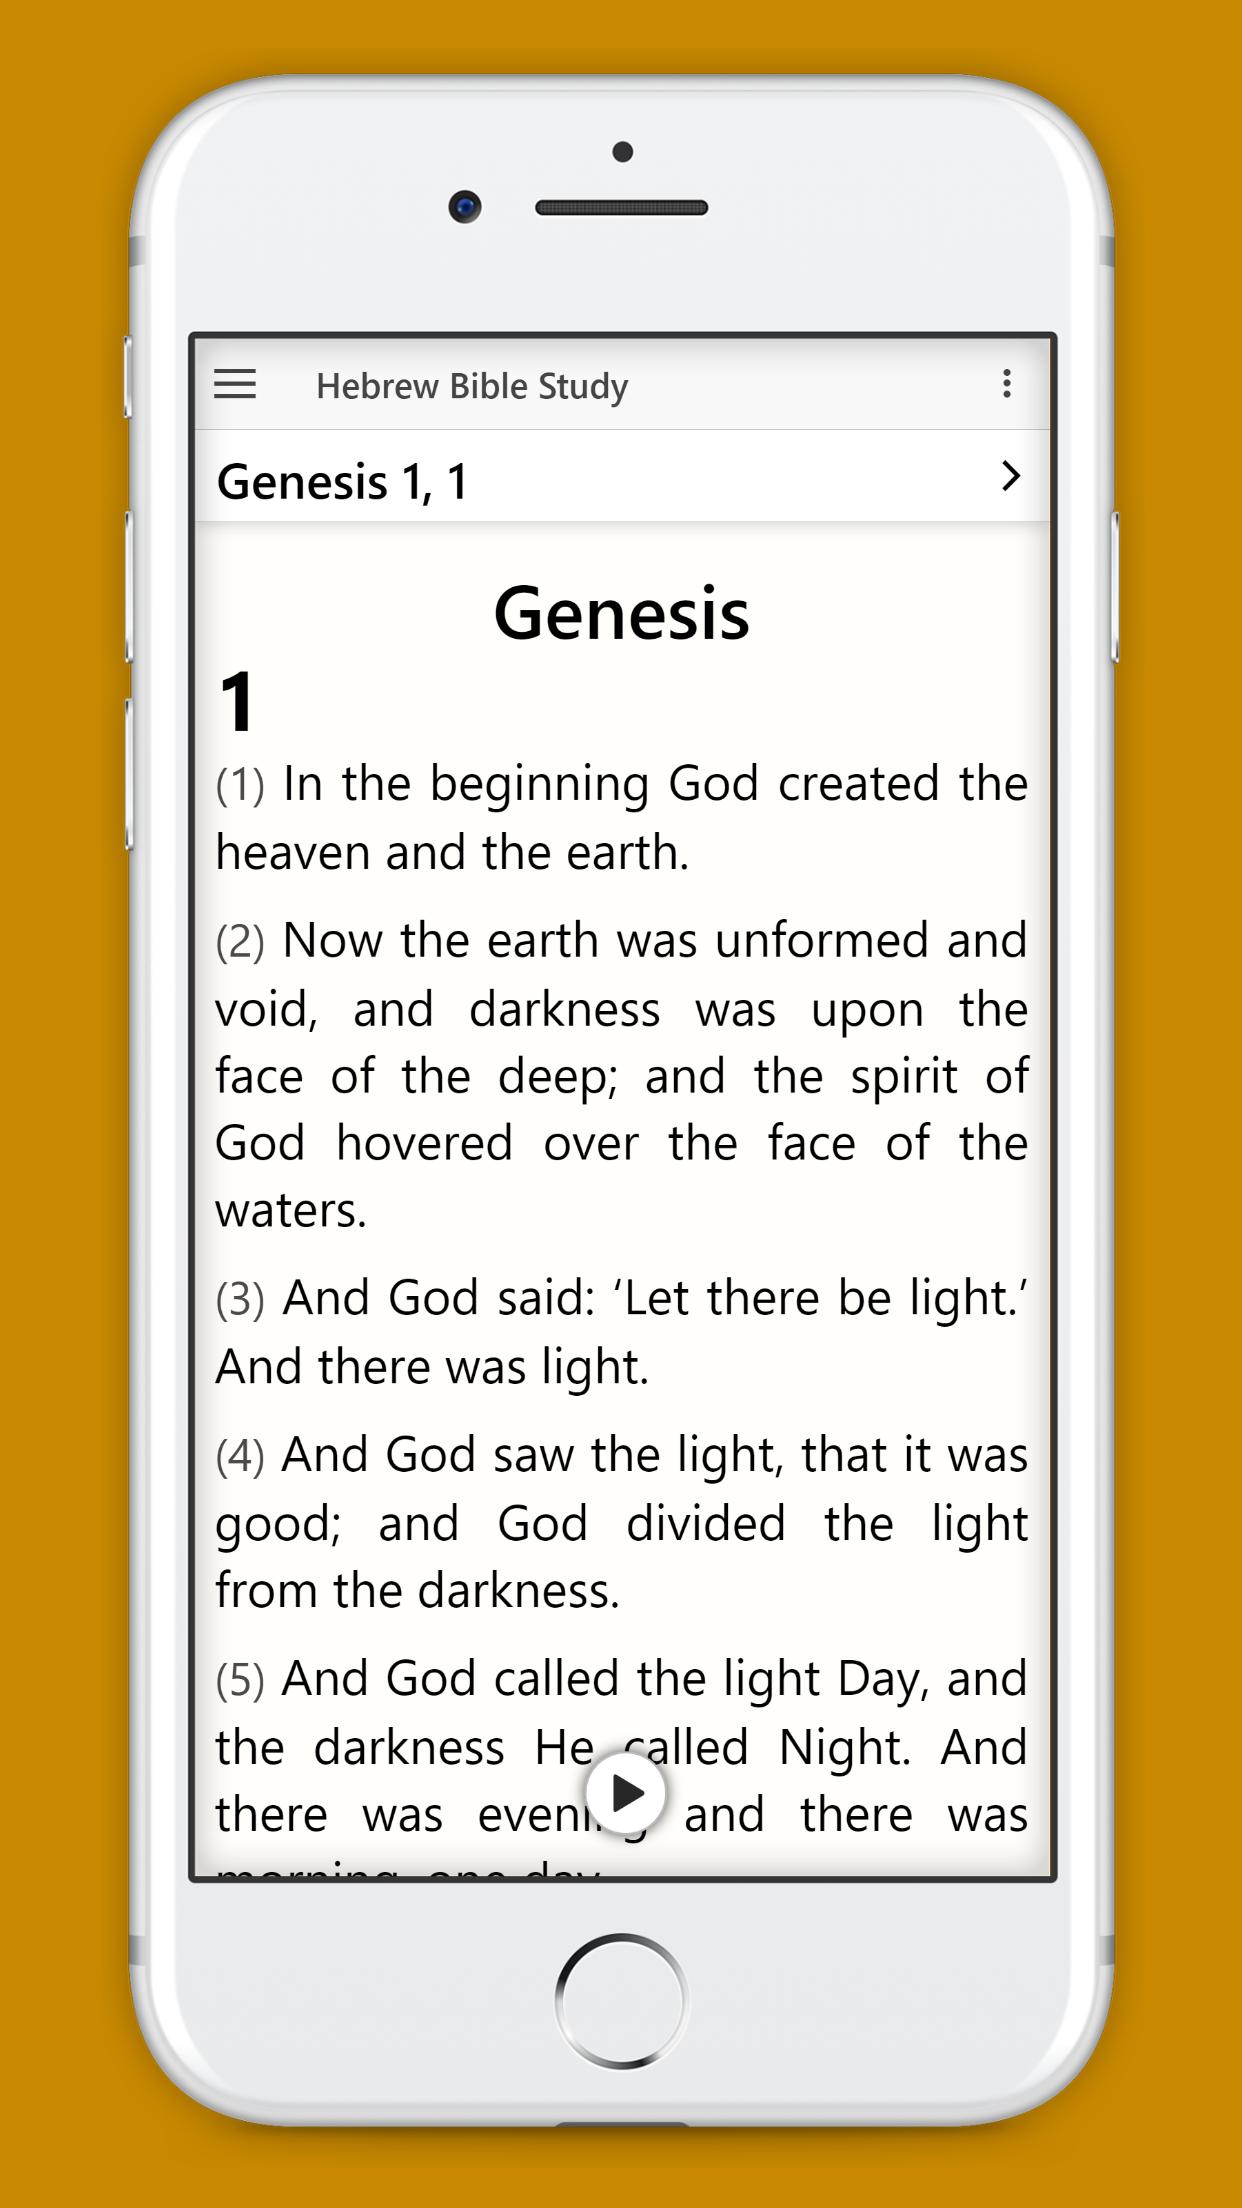 Hebrew Bible Study Commentary & Translation 30.0.29 Screenshot 1